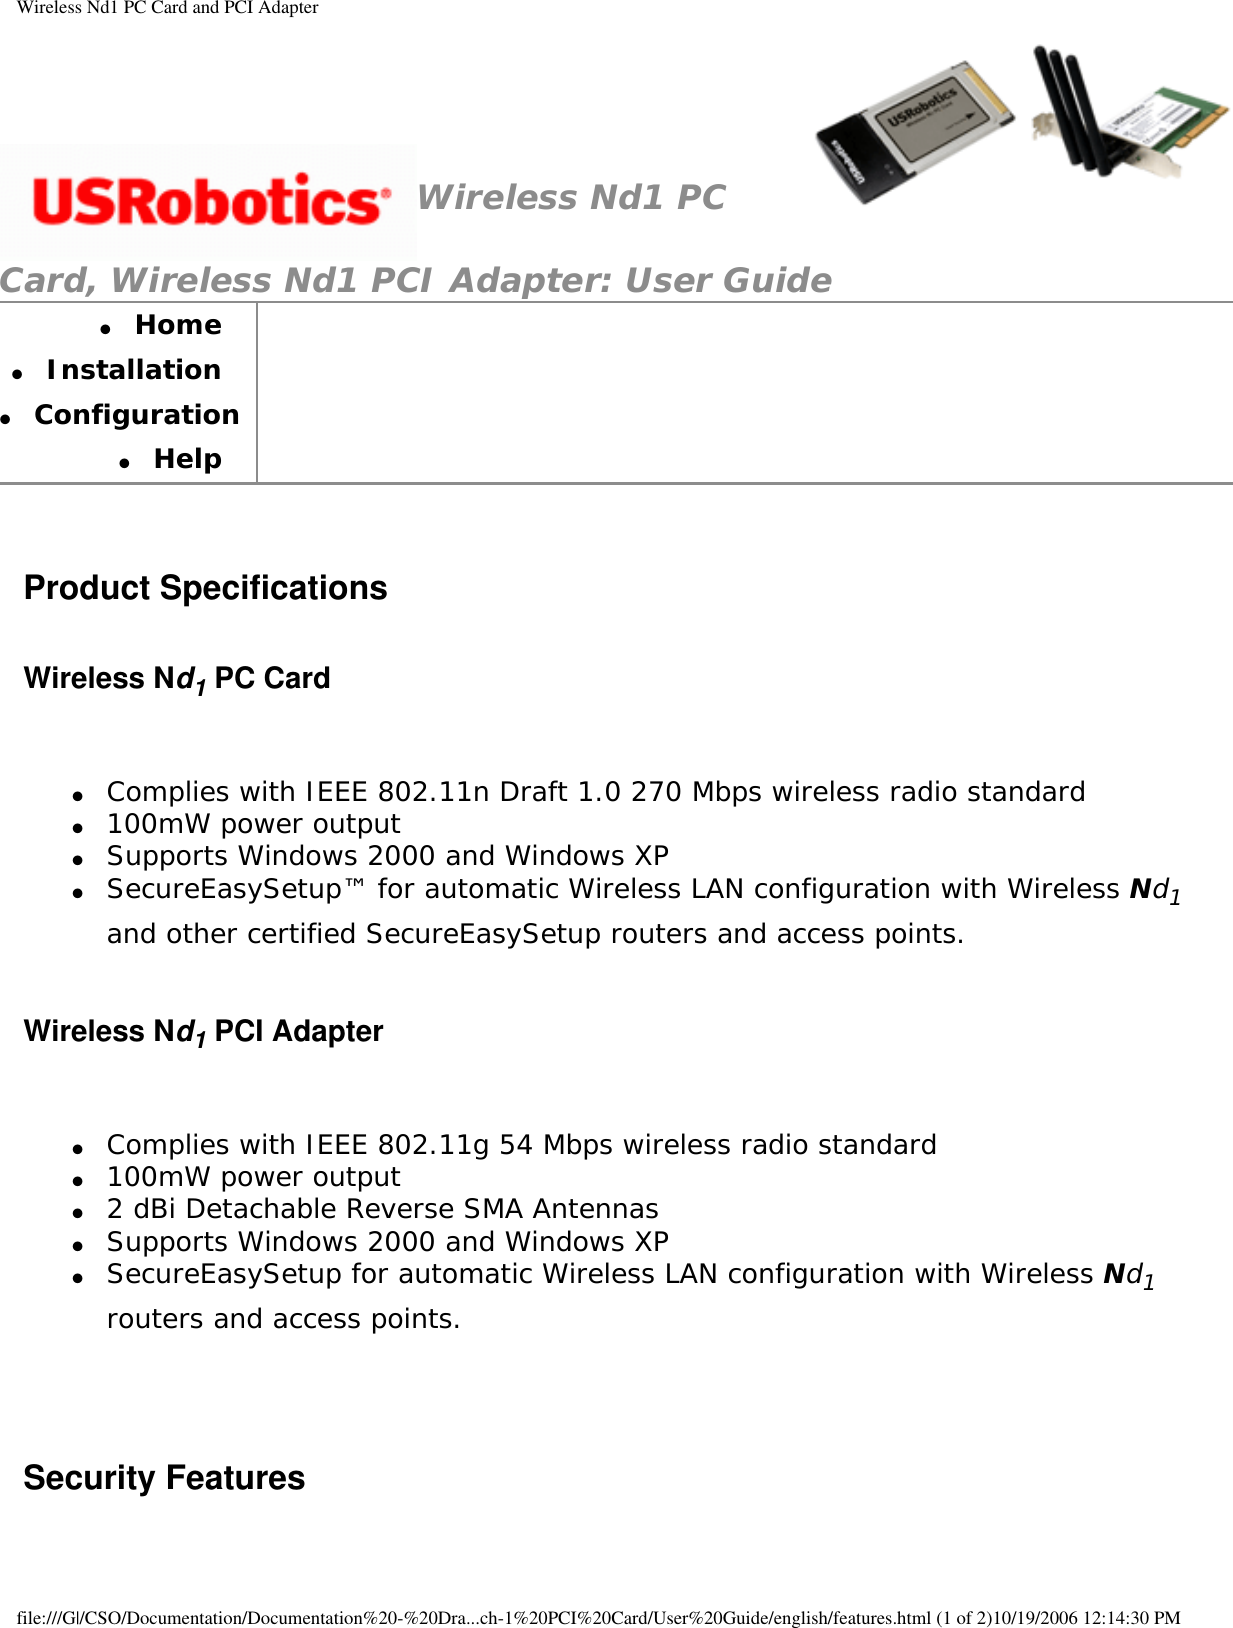 Page 3 of GemTek Technology P950622G USRobotics Wireless Nd1 PCI Adapter User Manual Wireless Nd1 PC Card and PCI Adapter